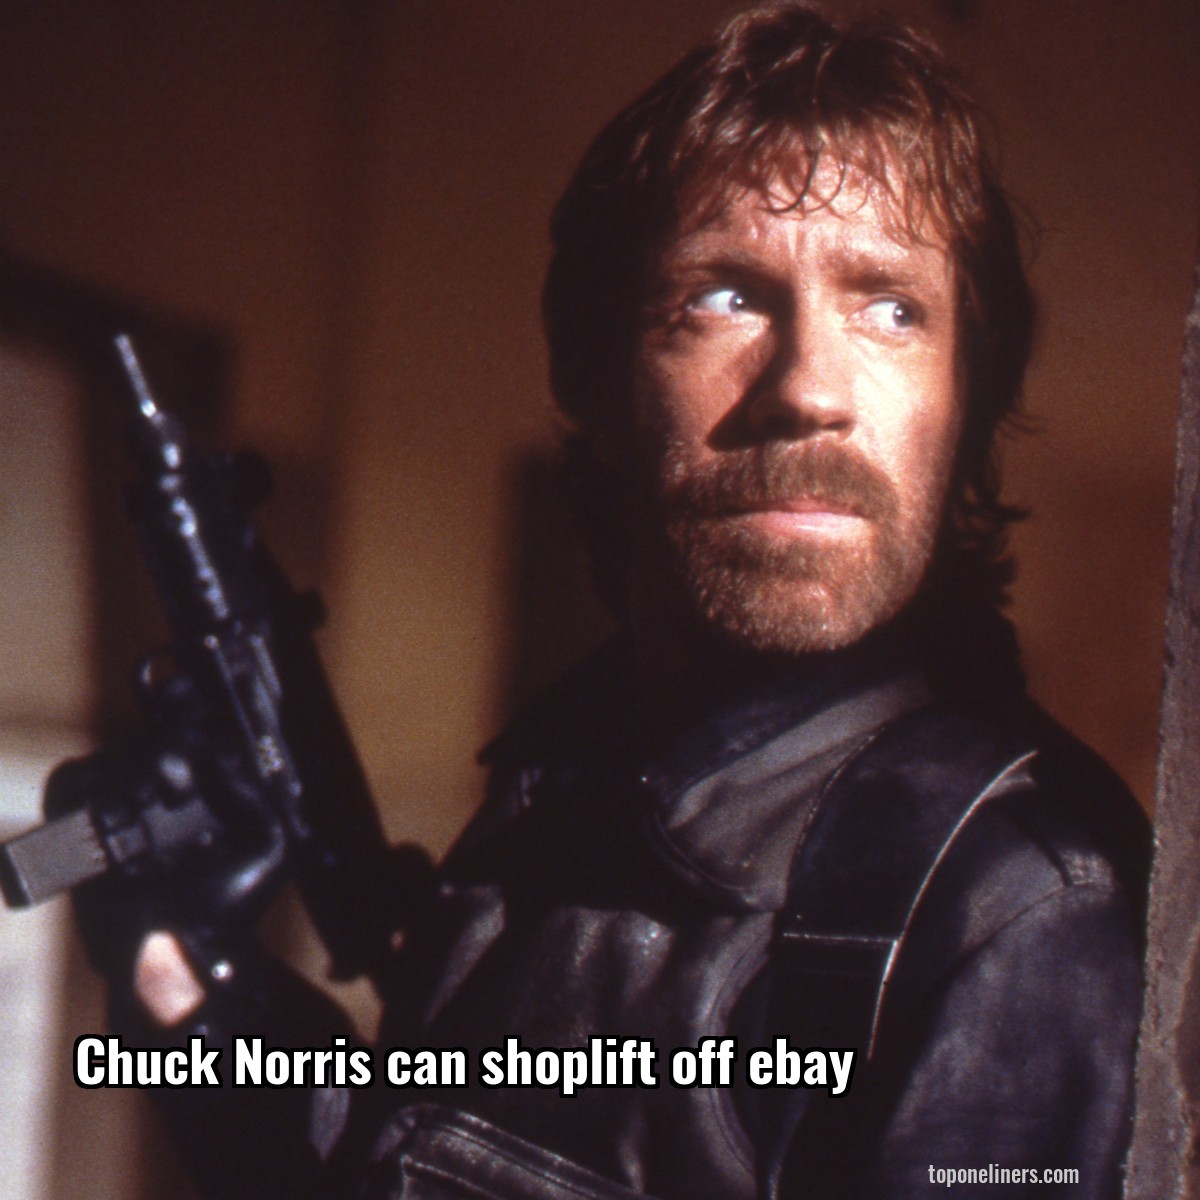 Chuck Norris can shoplift off ebay